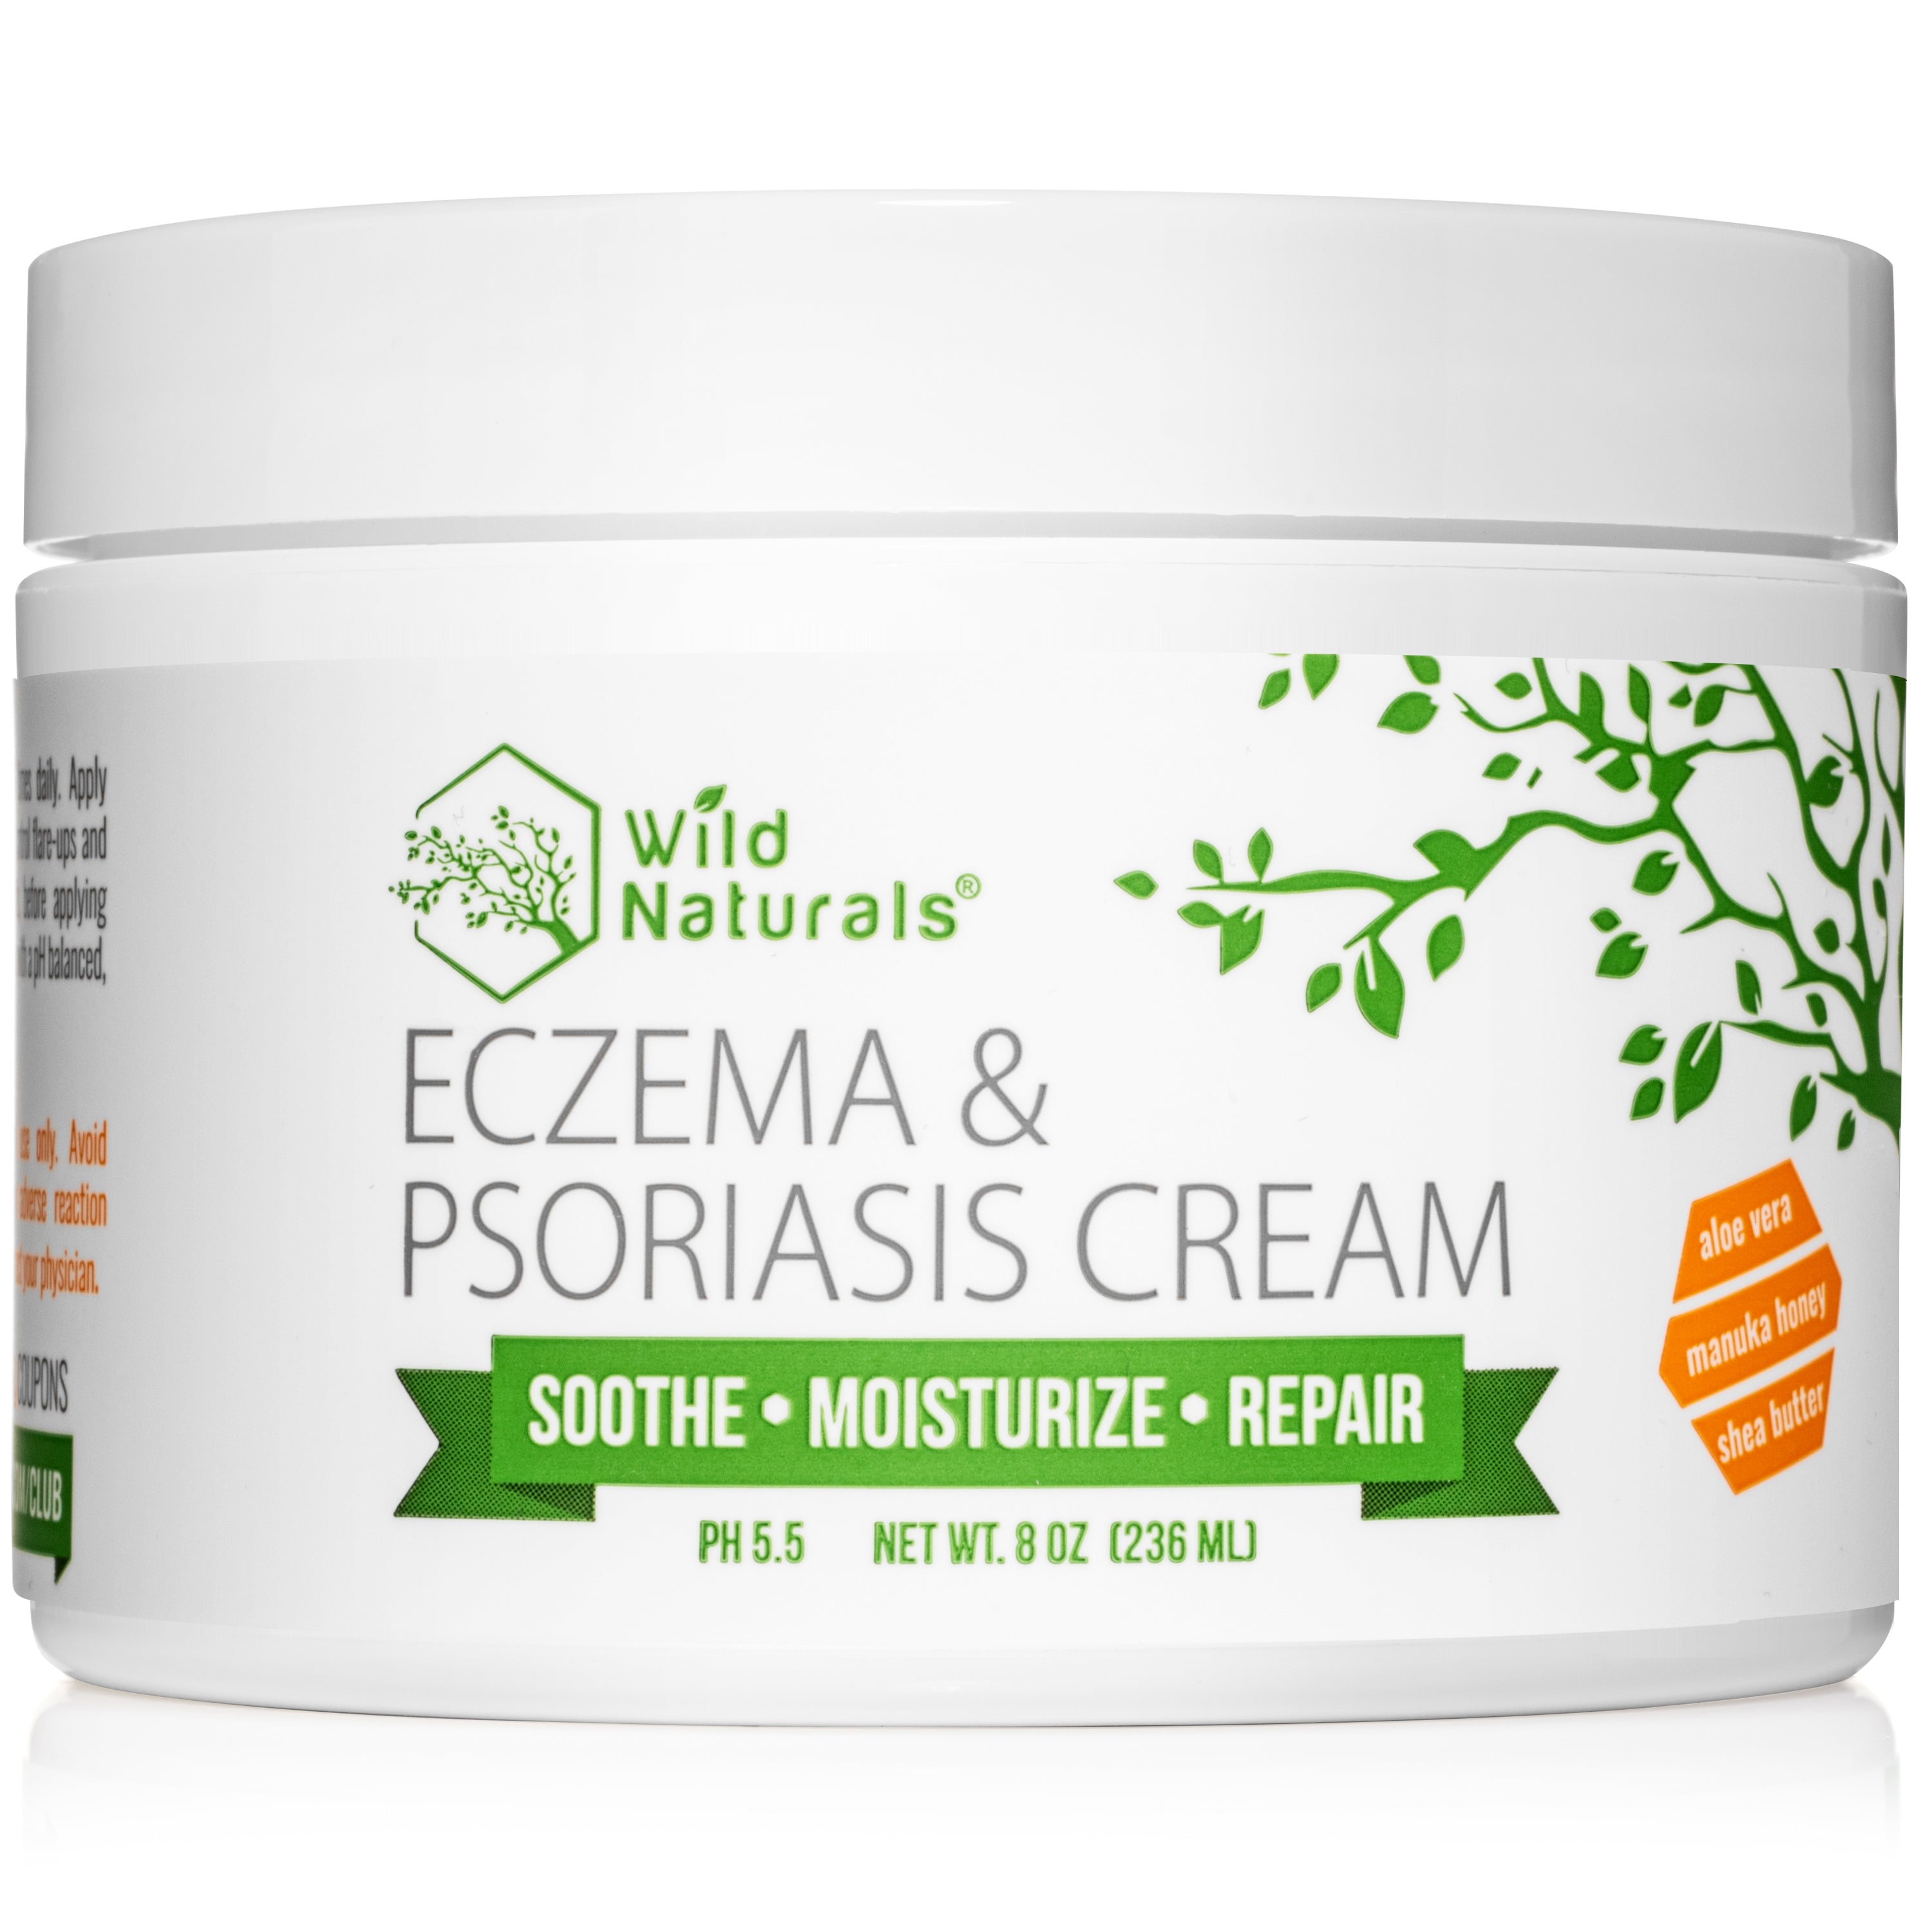 Wild Naturals Eczema Psoriasis Cream